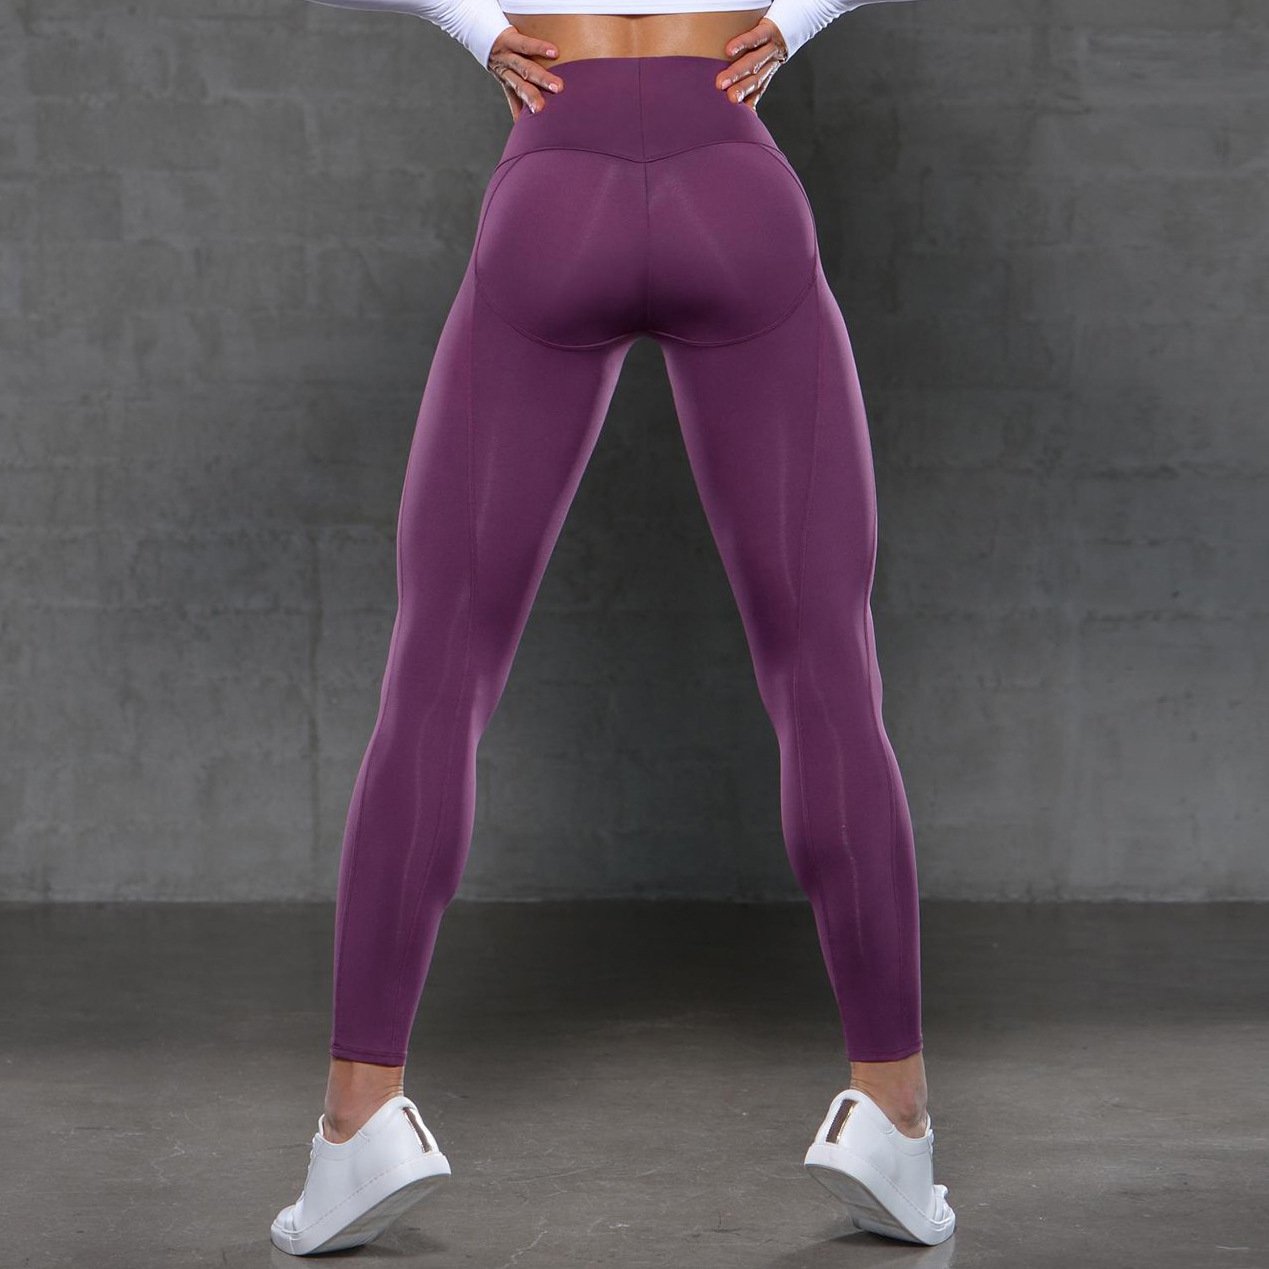 Sexy High Waist Women Running Sports Yoga Leggings-Activewear-Purple-S-Free Shipping at meselling99